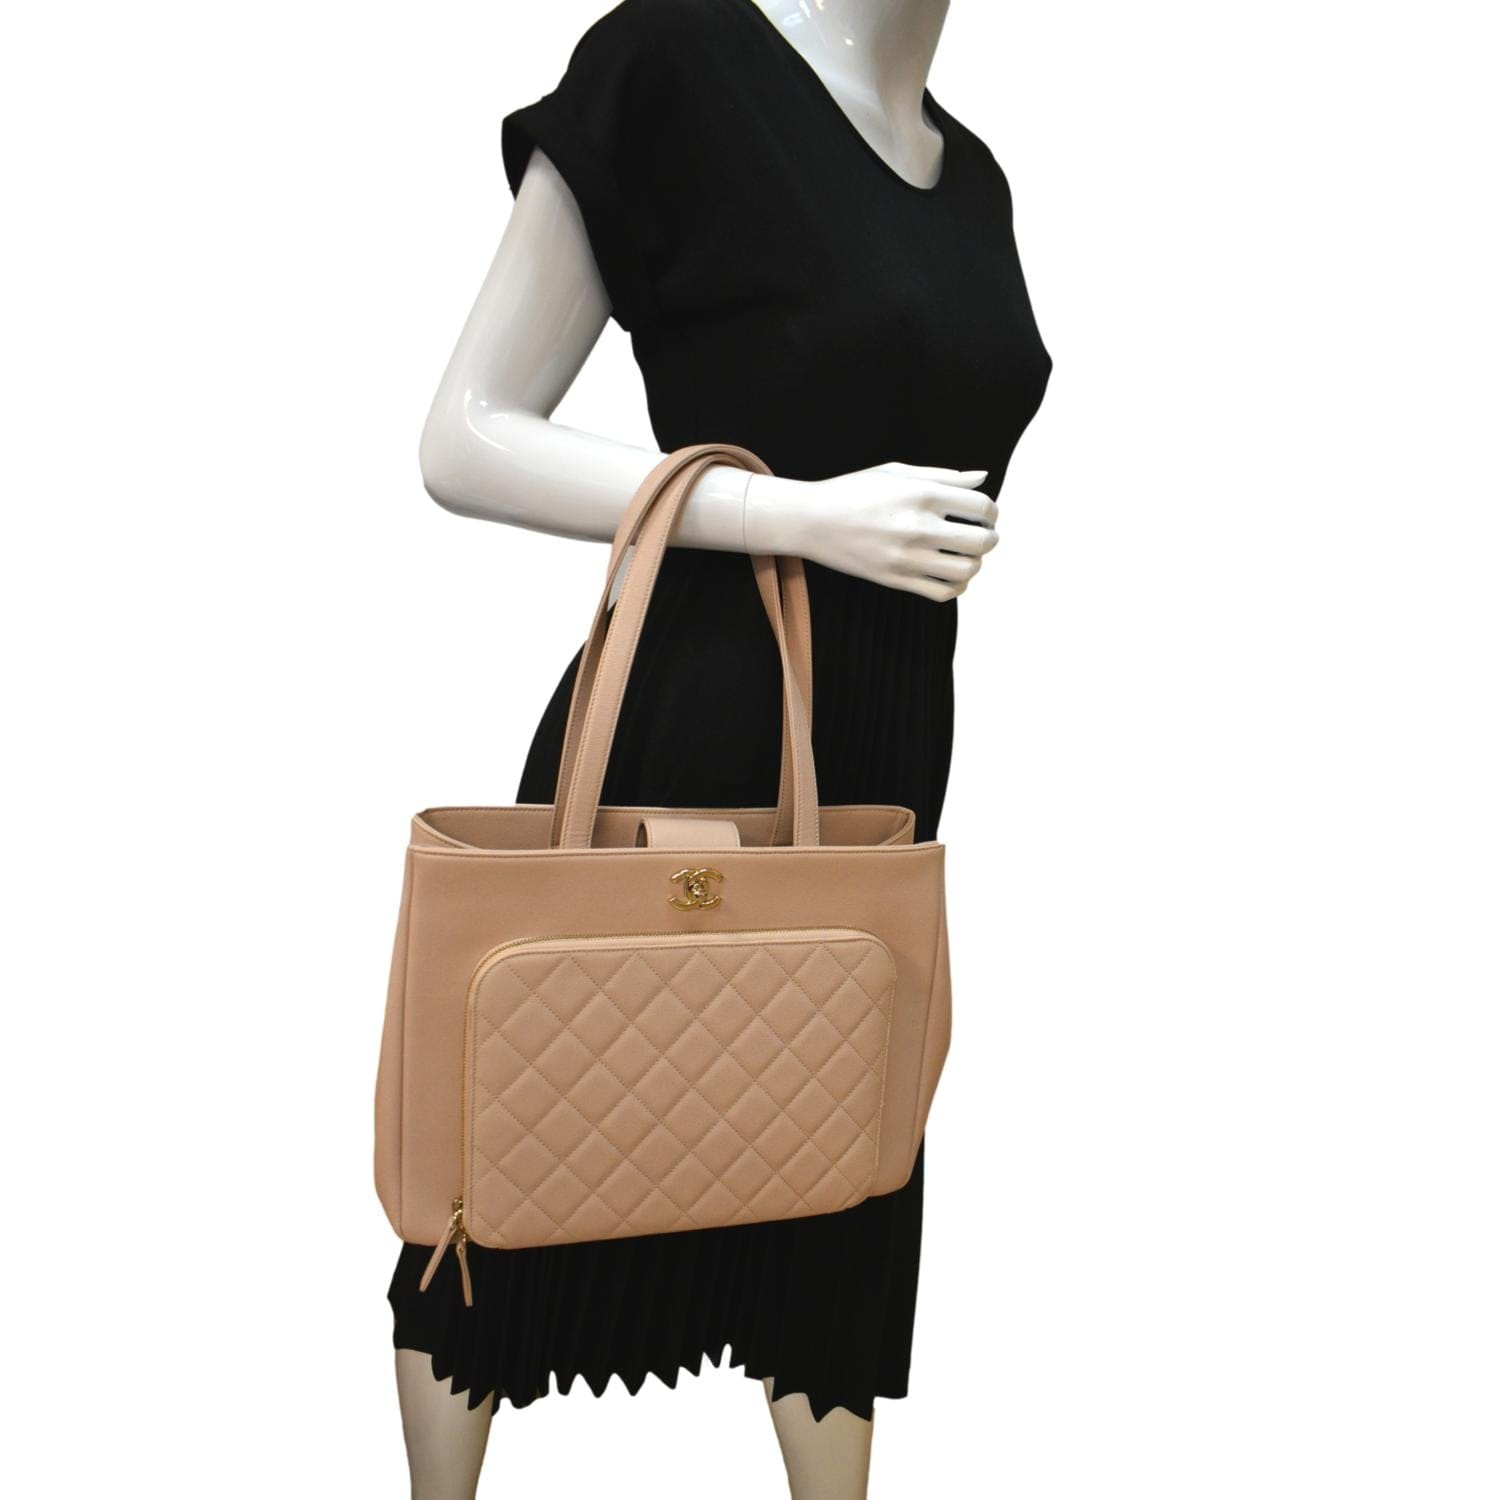 Chanel business affinity tote bag - Mirino Luxury Bag Spa